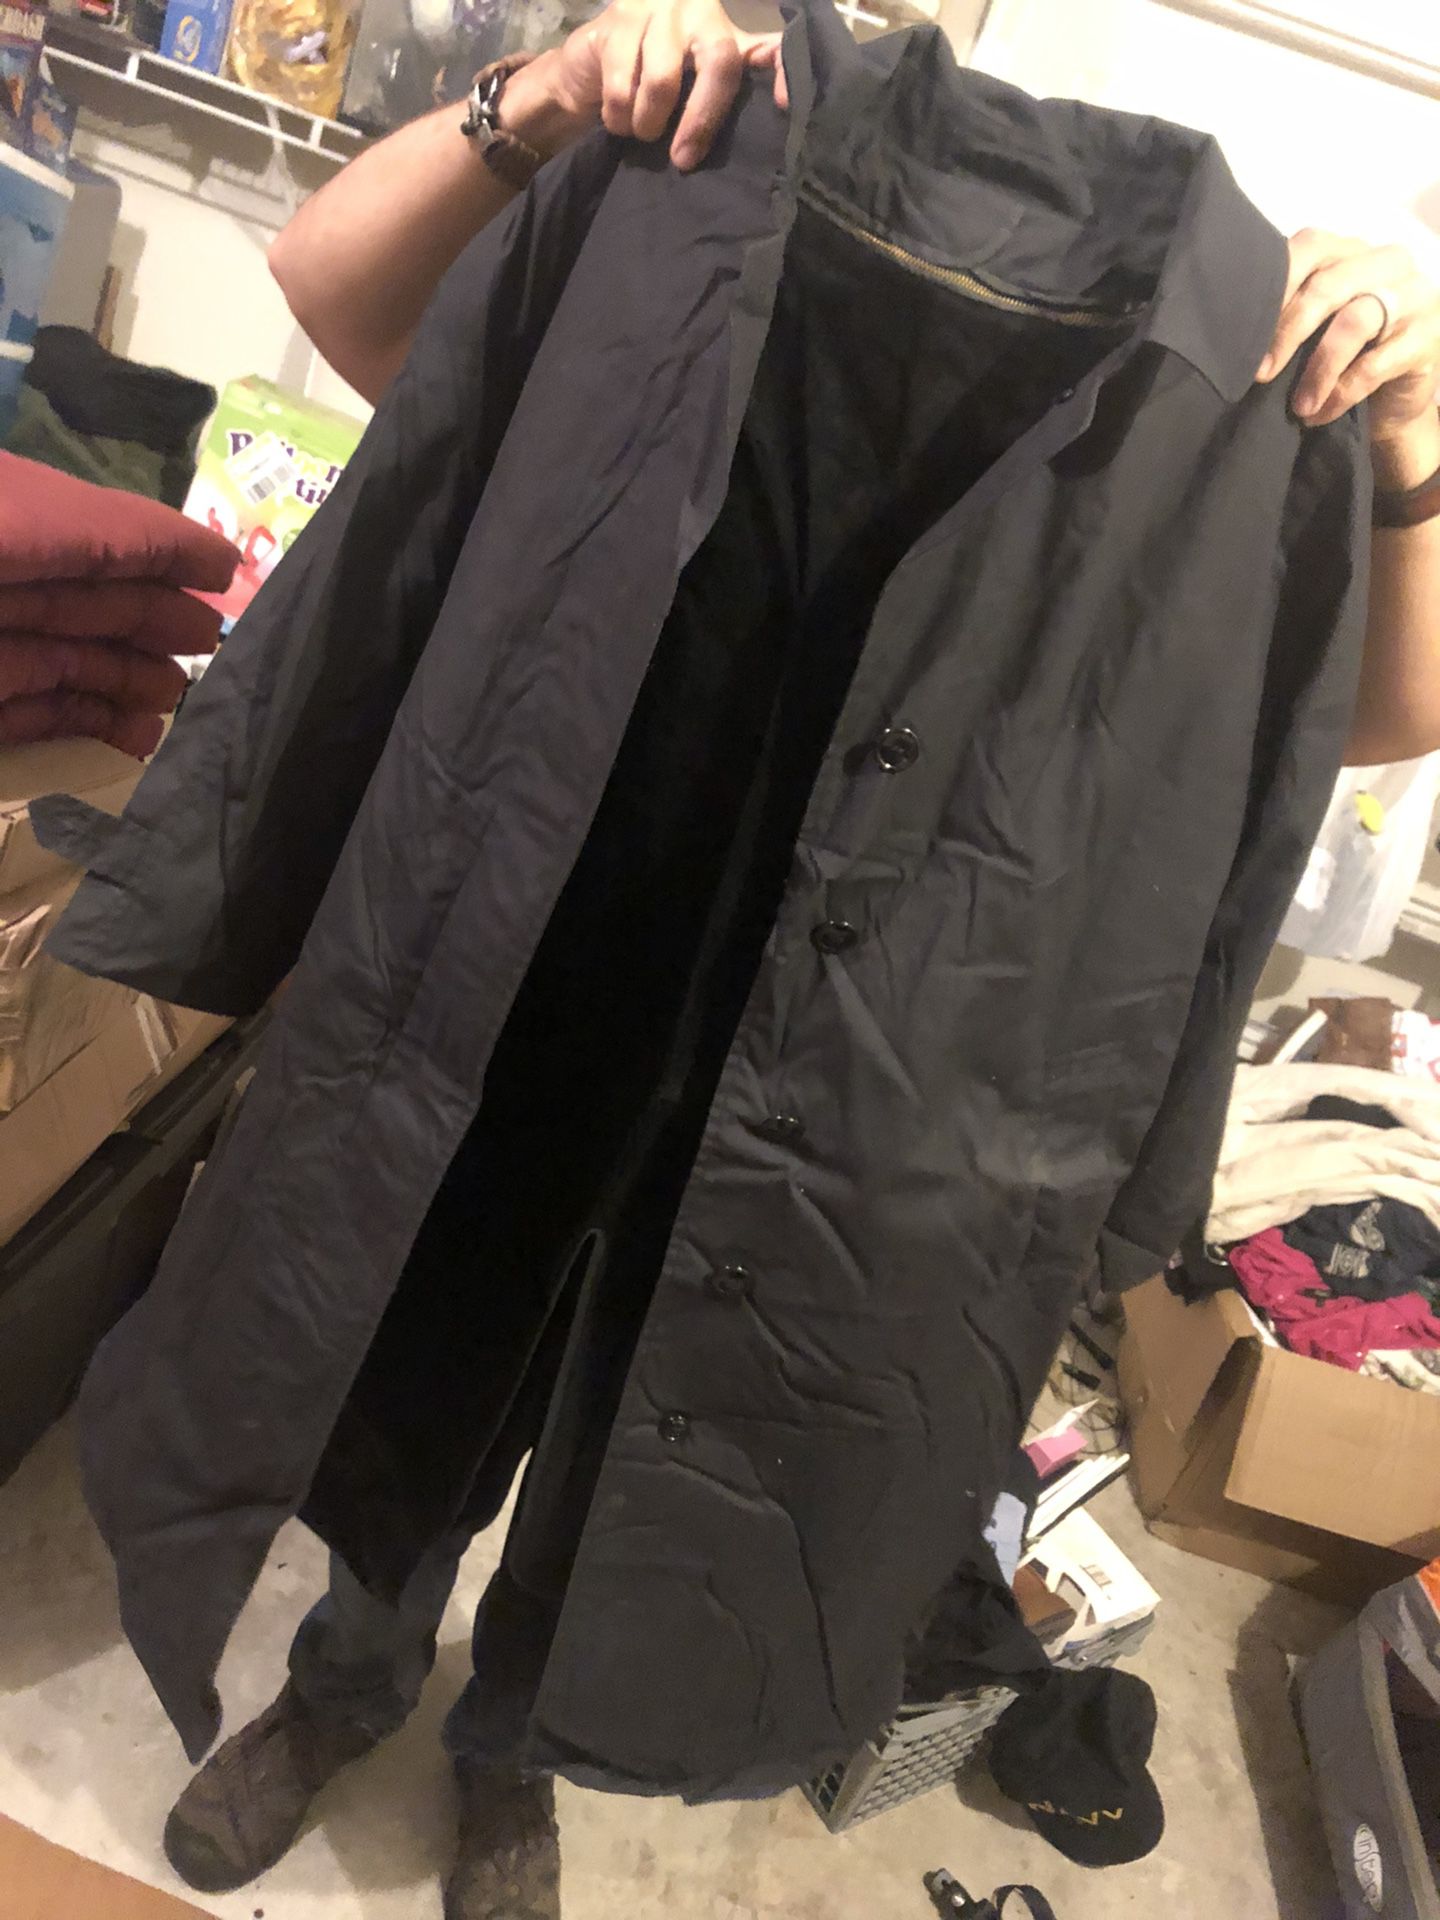 Black Rain Coat with Liner. Size 18R (small)or 42R (medium)